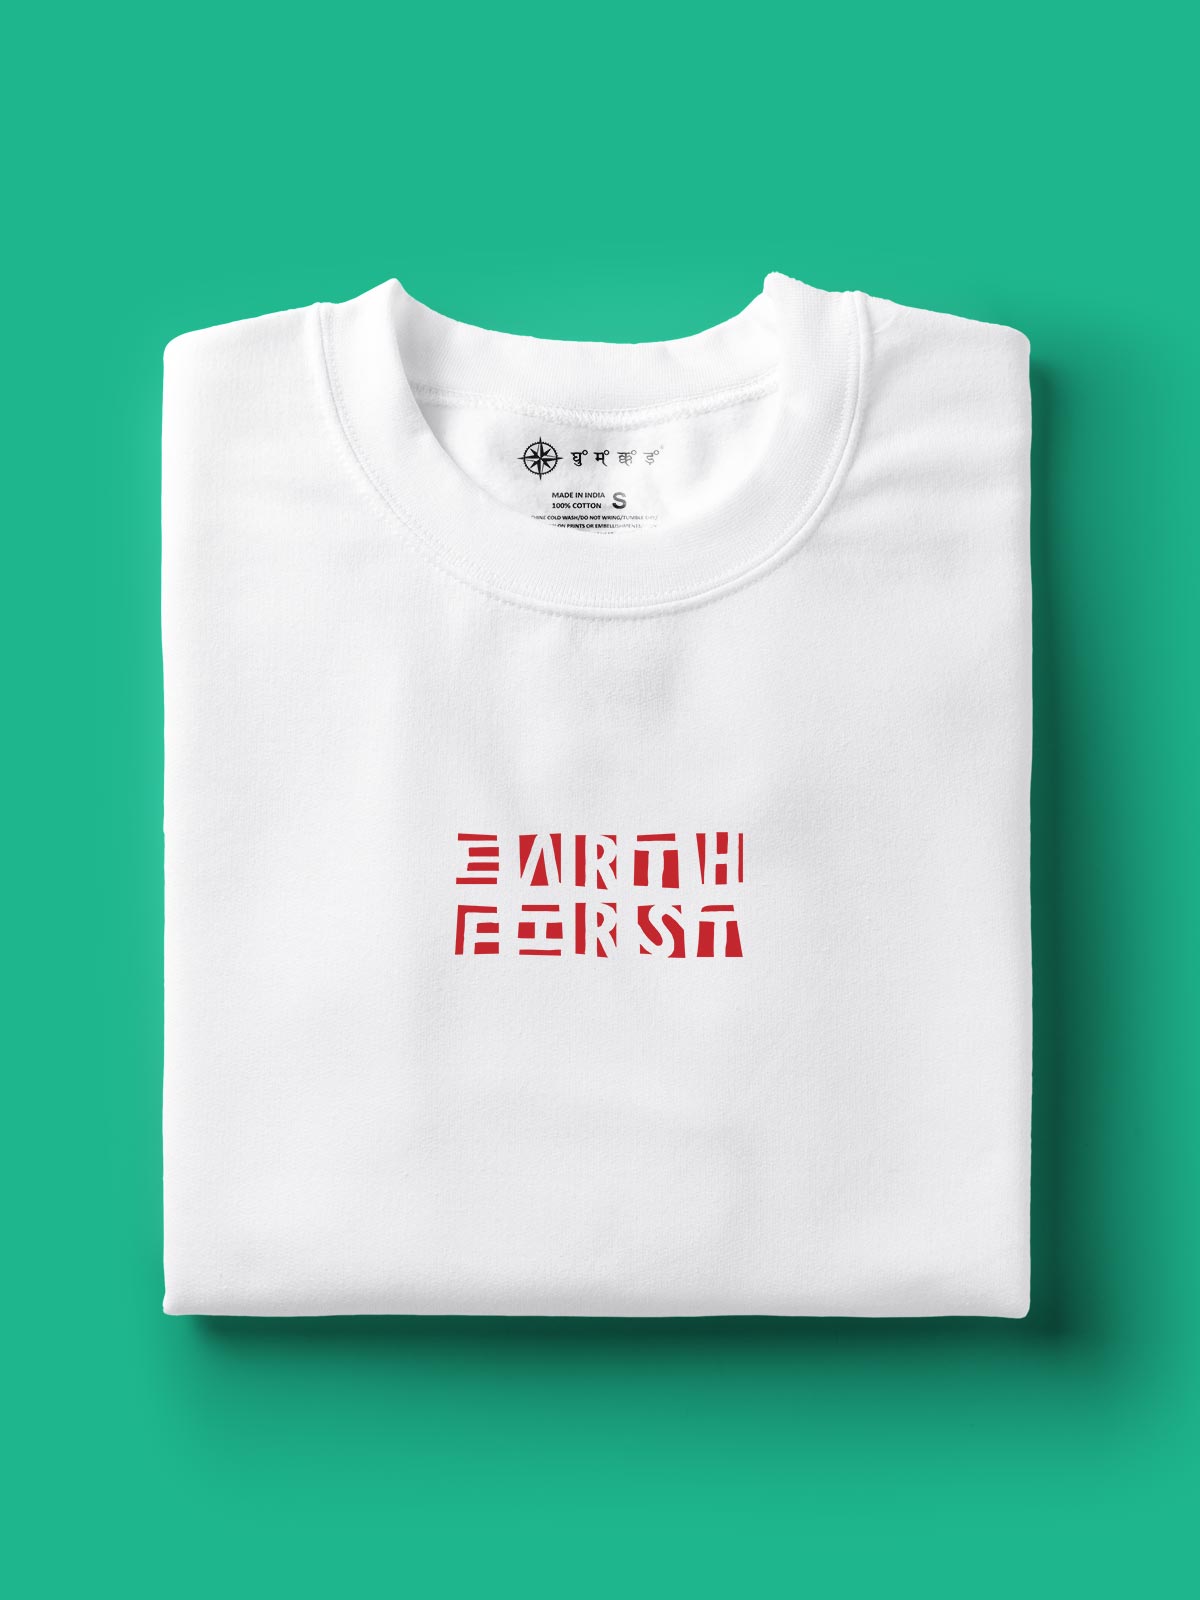 Earth-first-backprint-t-shirt-for-men by Ghumakkad